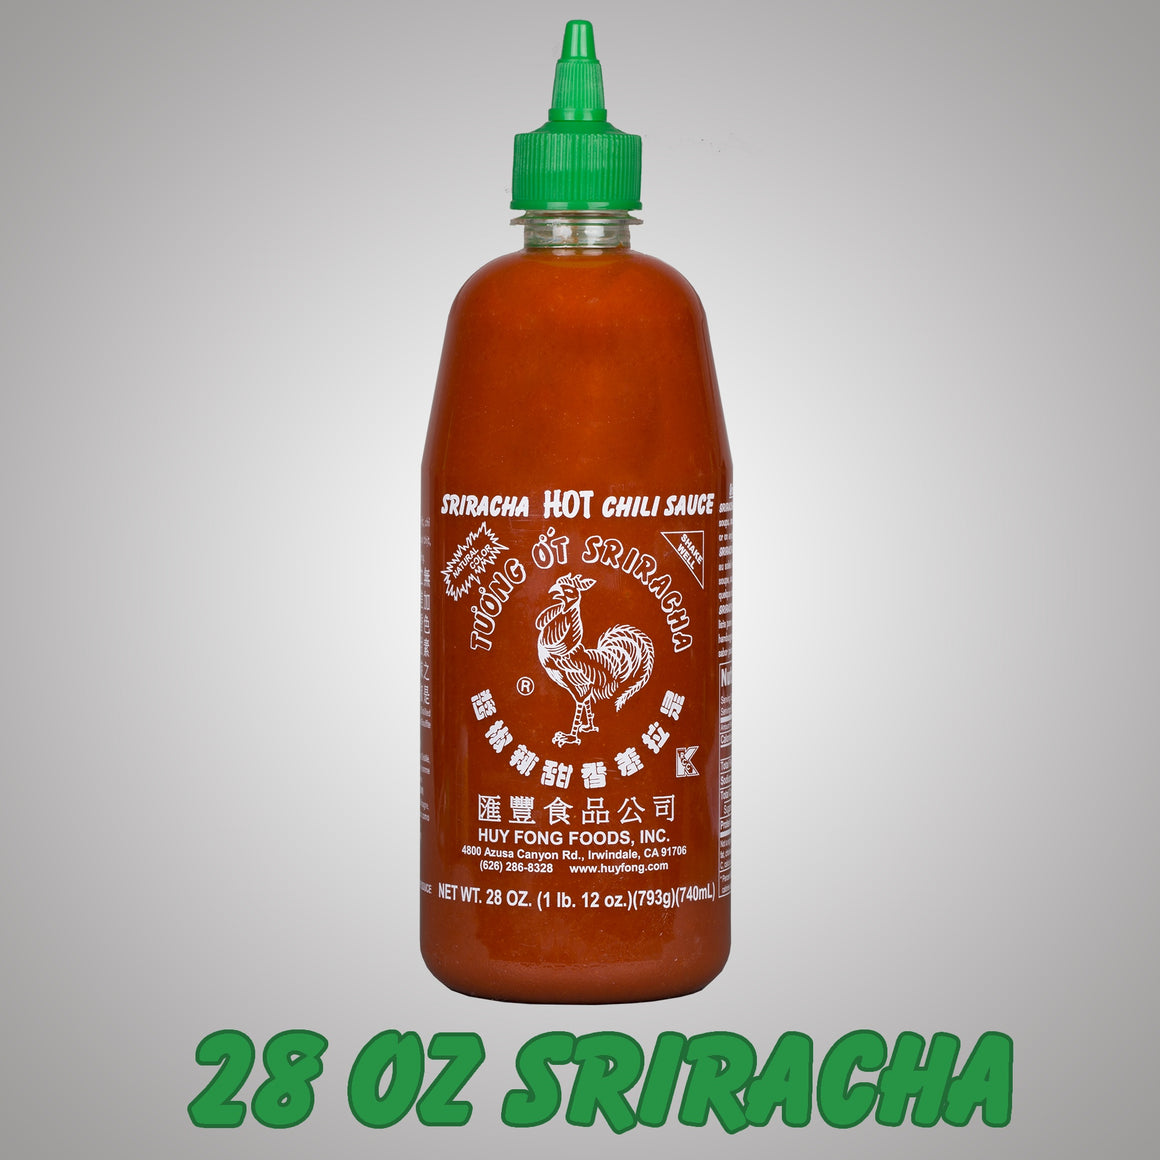 Bundles - Sriracha For The Whole Crew